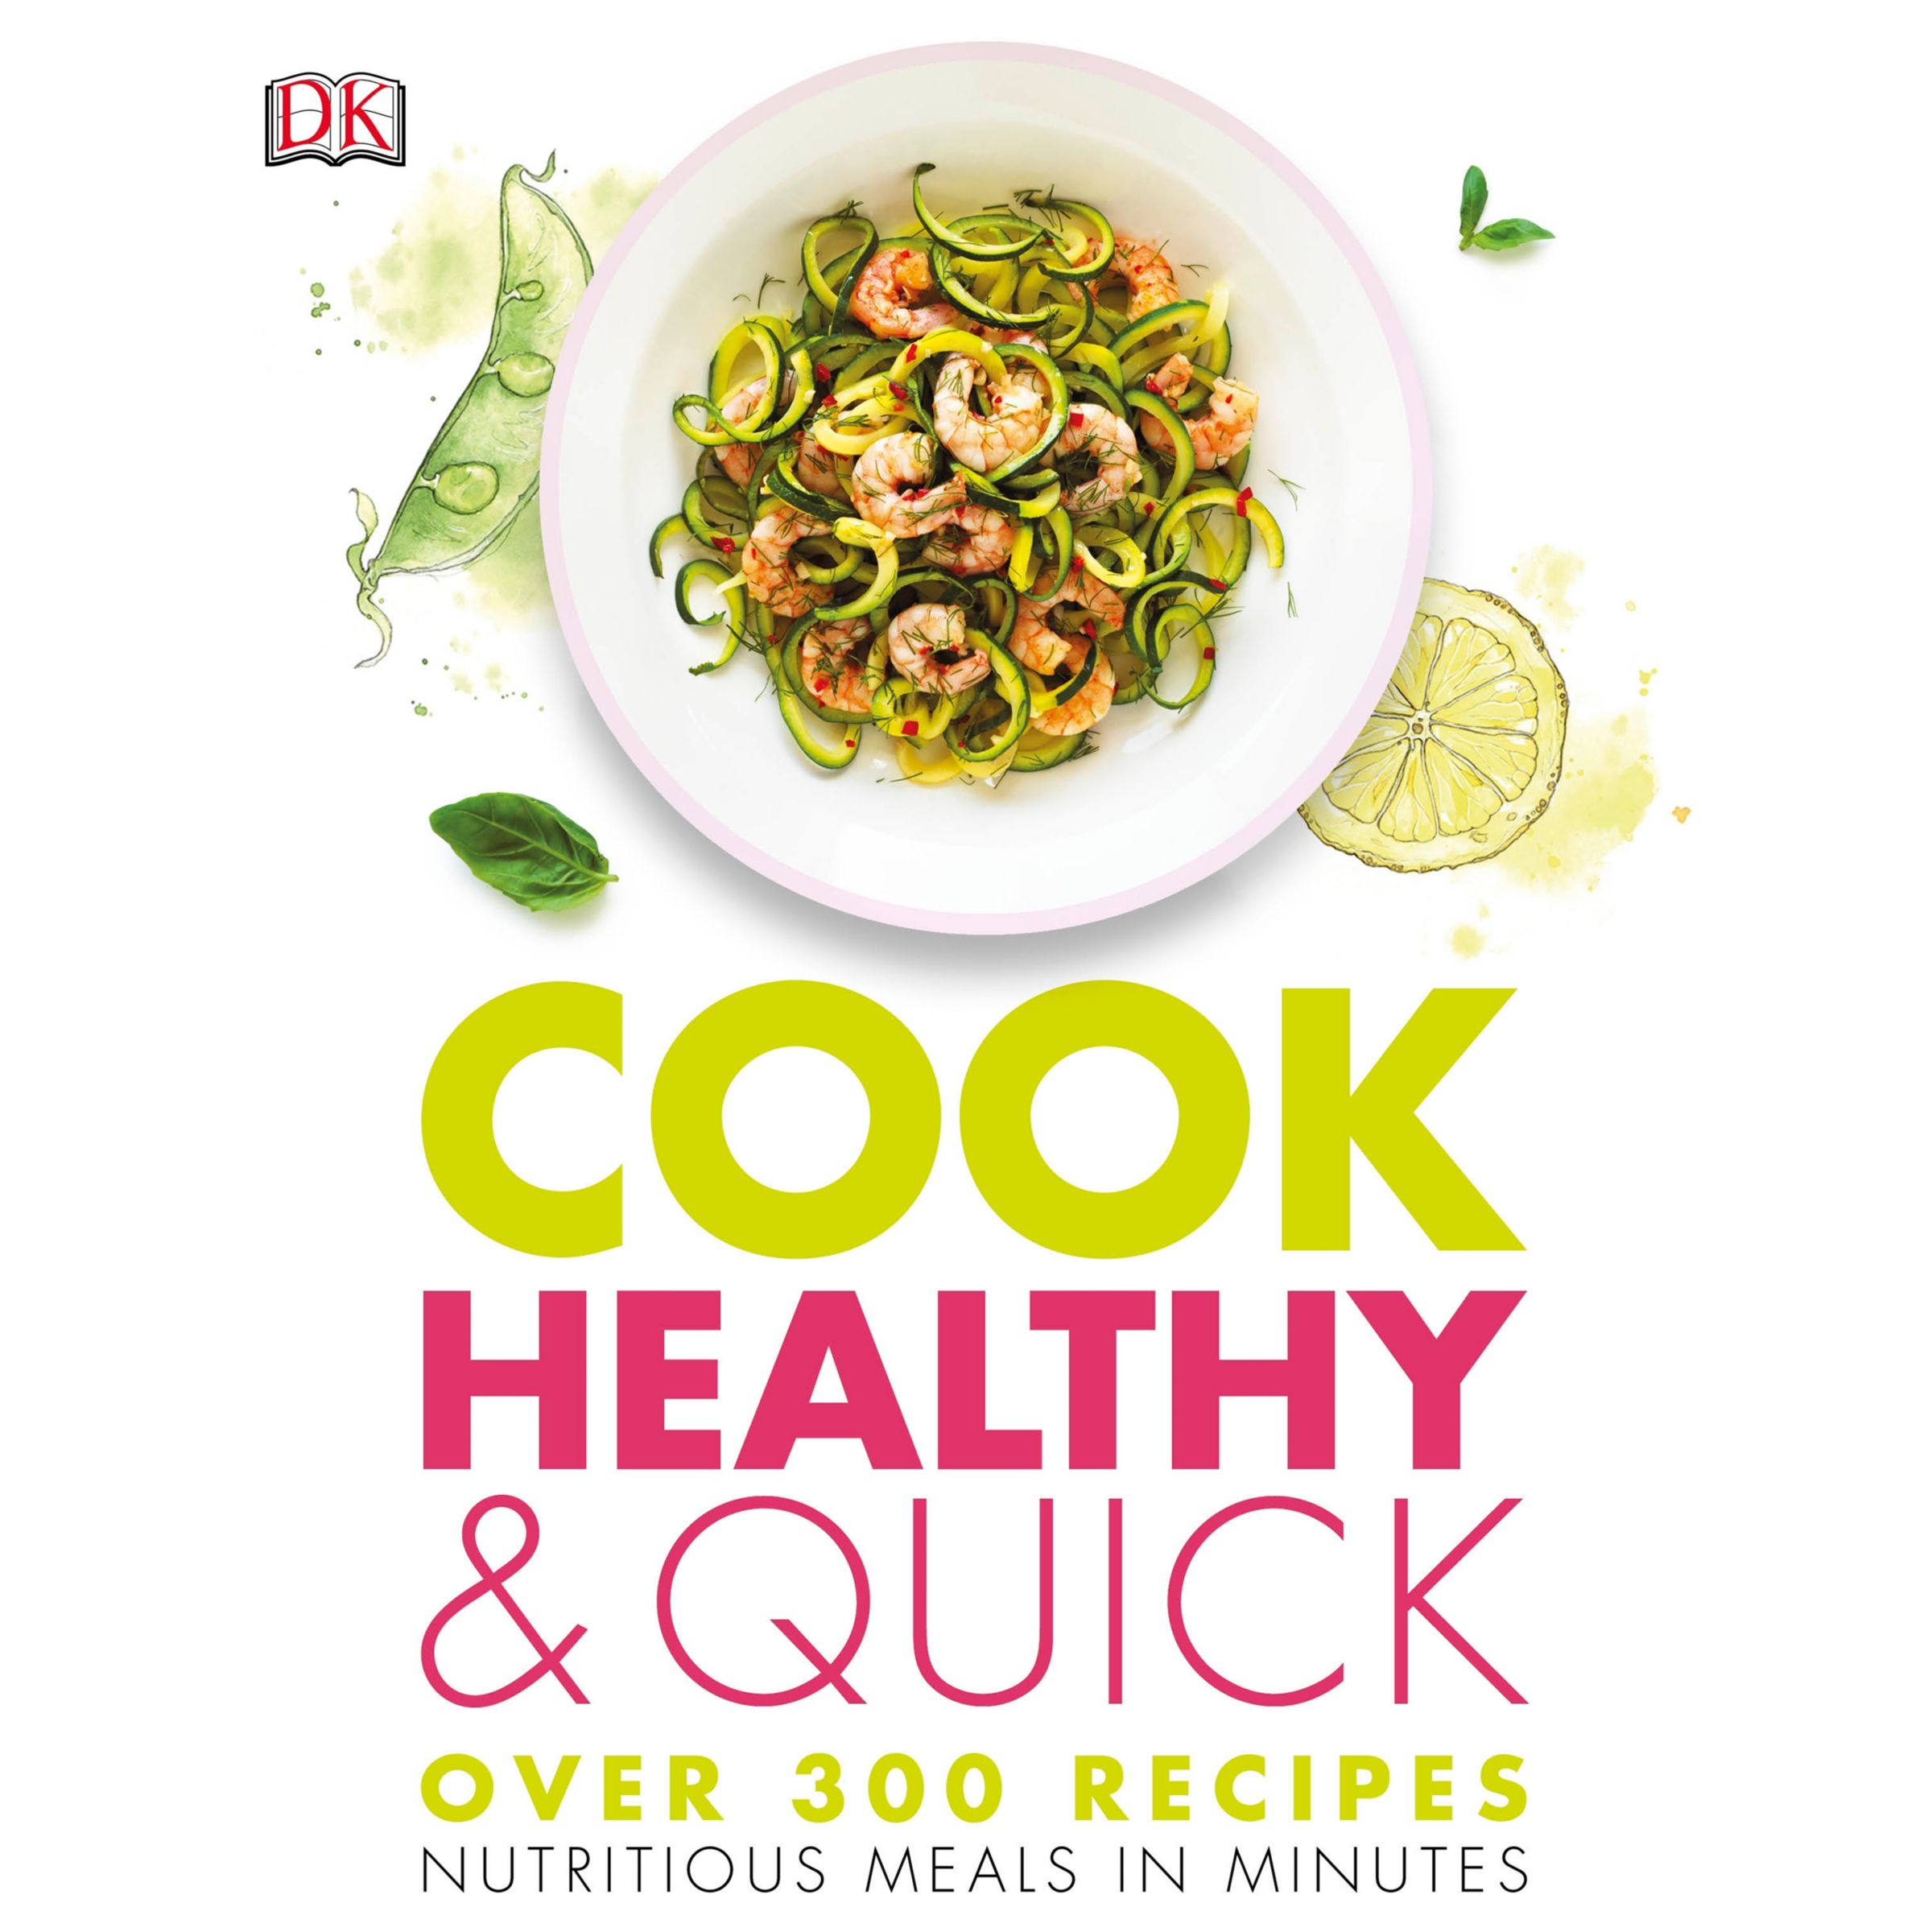 Healthy Recipes Book - GREAT HEALTHY RECIPES